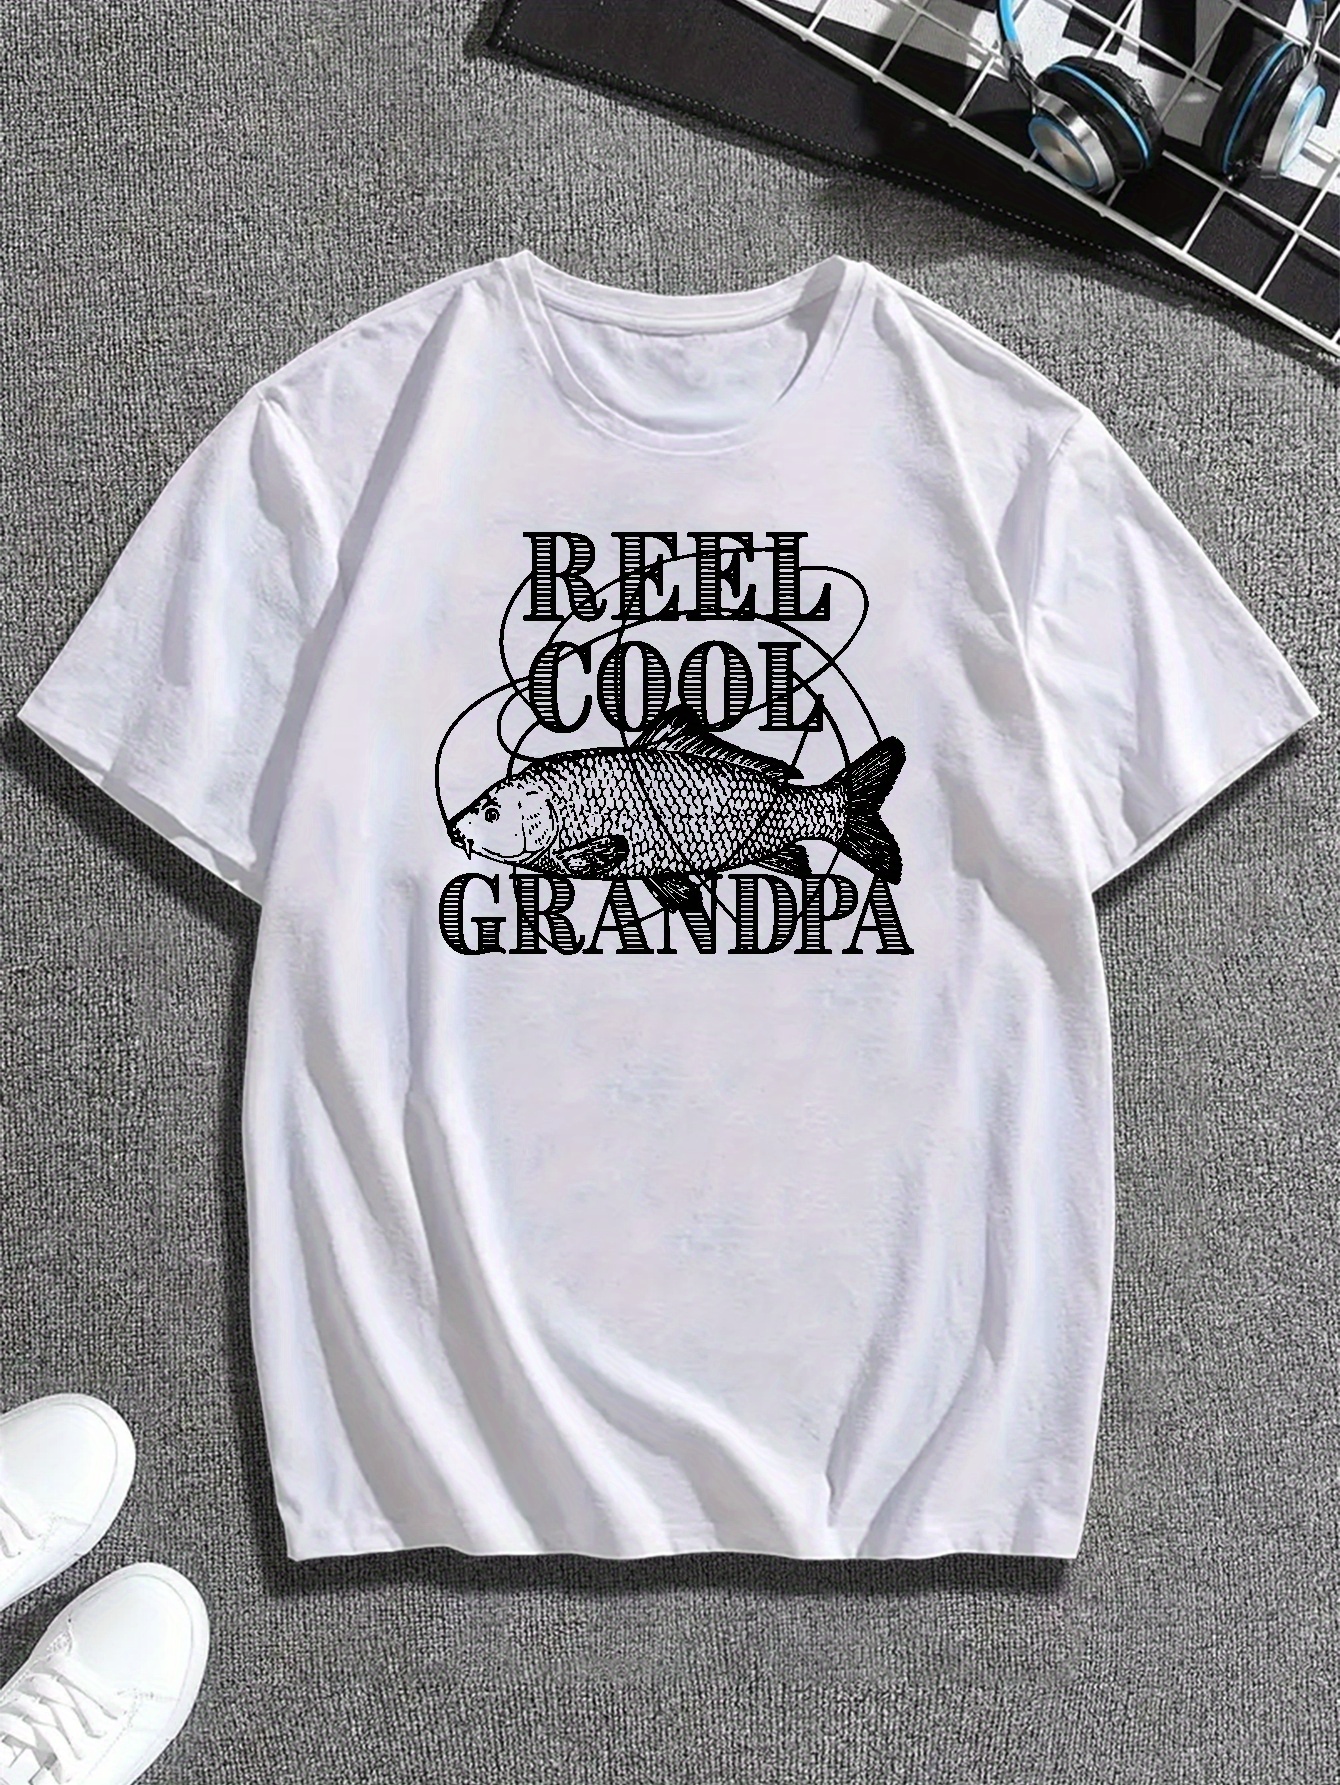 Reel Cool Grandpa Print T Shirt Tees Men Casual Short Sleeve